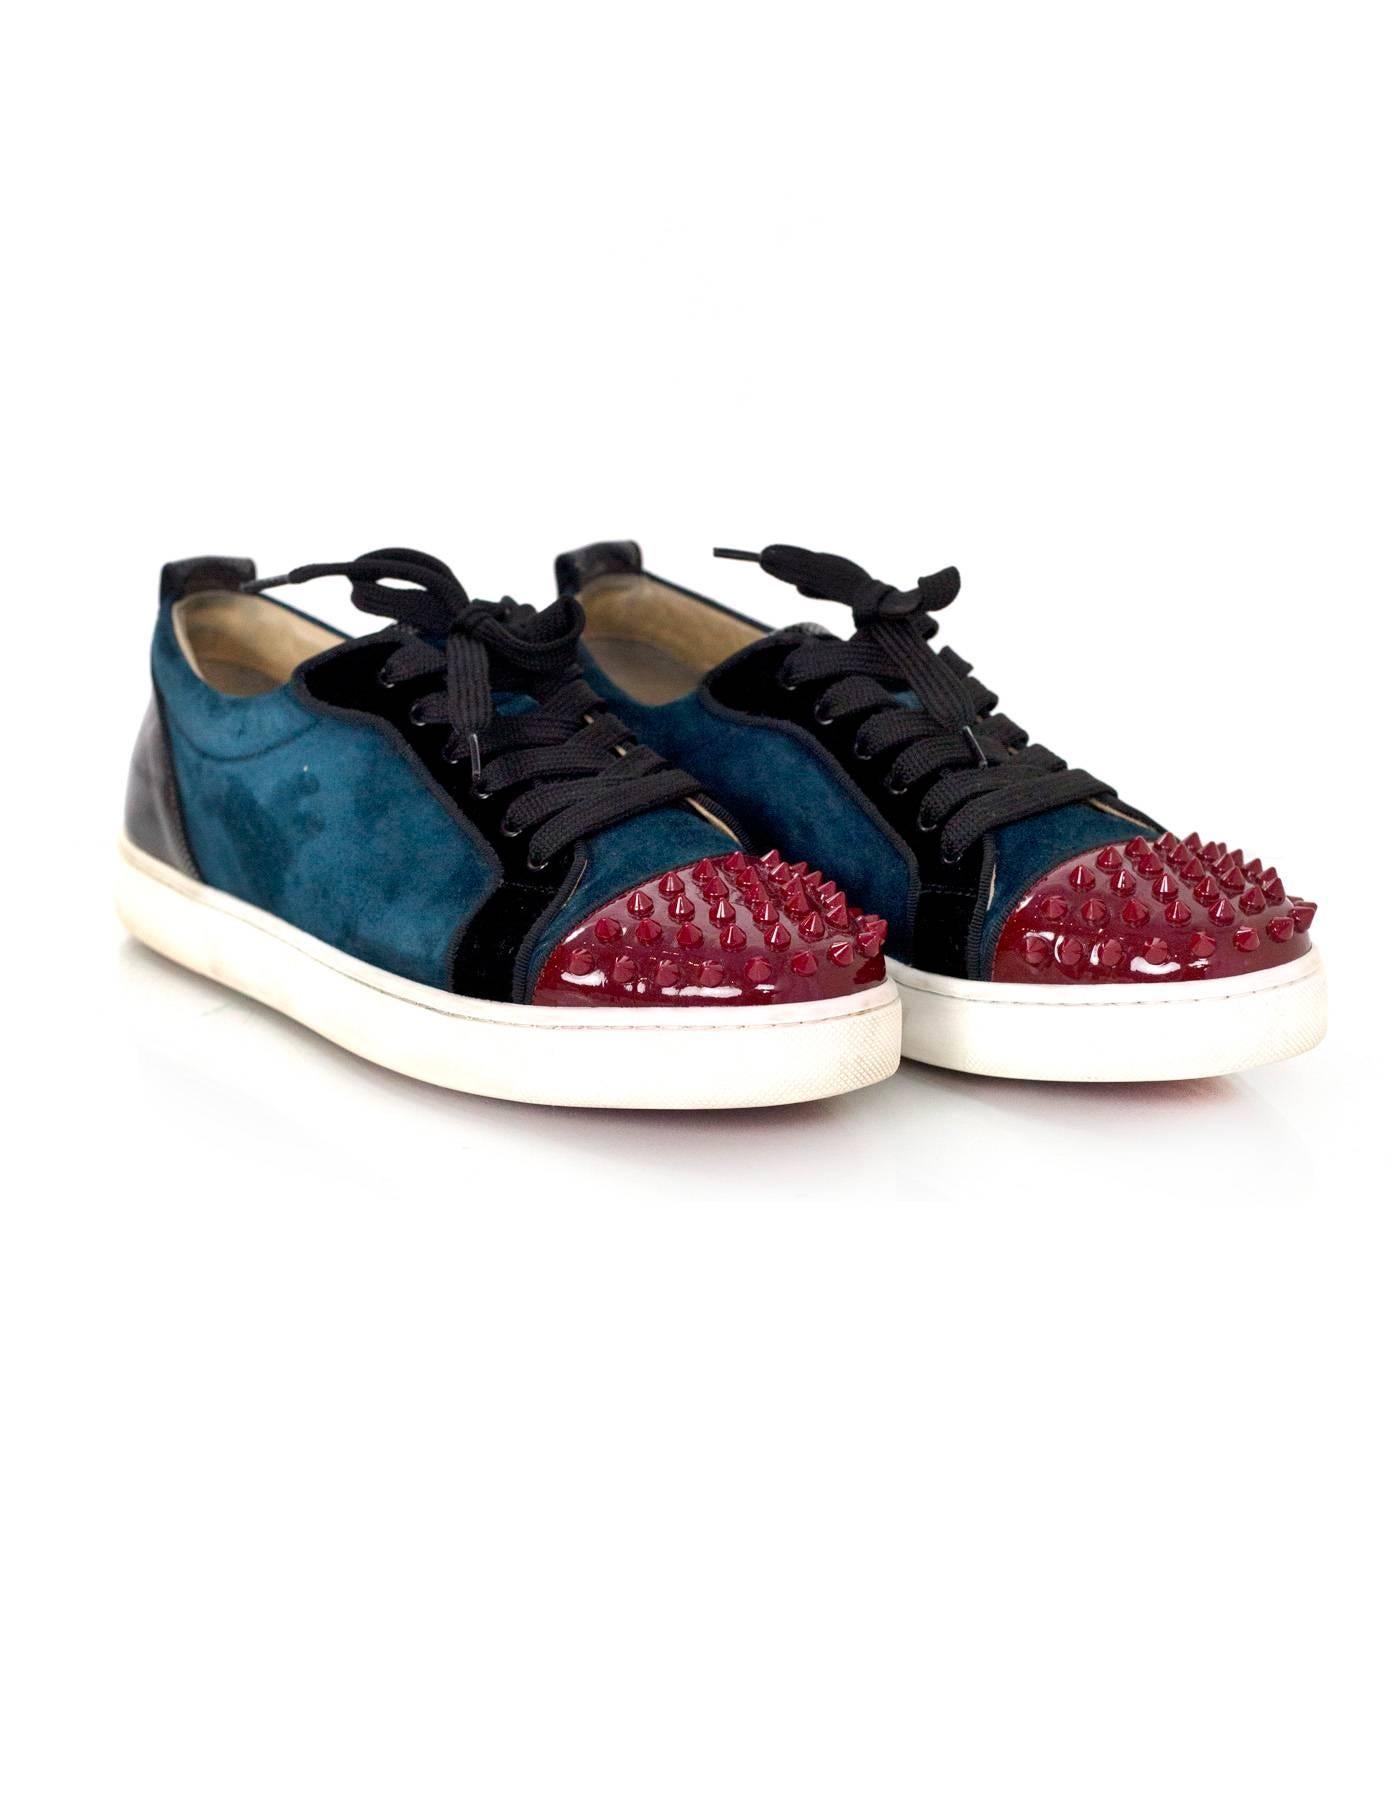 Women's Christian Louboutin Teal & Red Louis Jr Spike Sneakers Sz 40 rt. $795